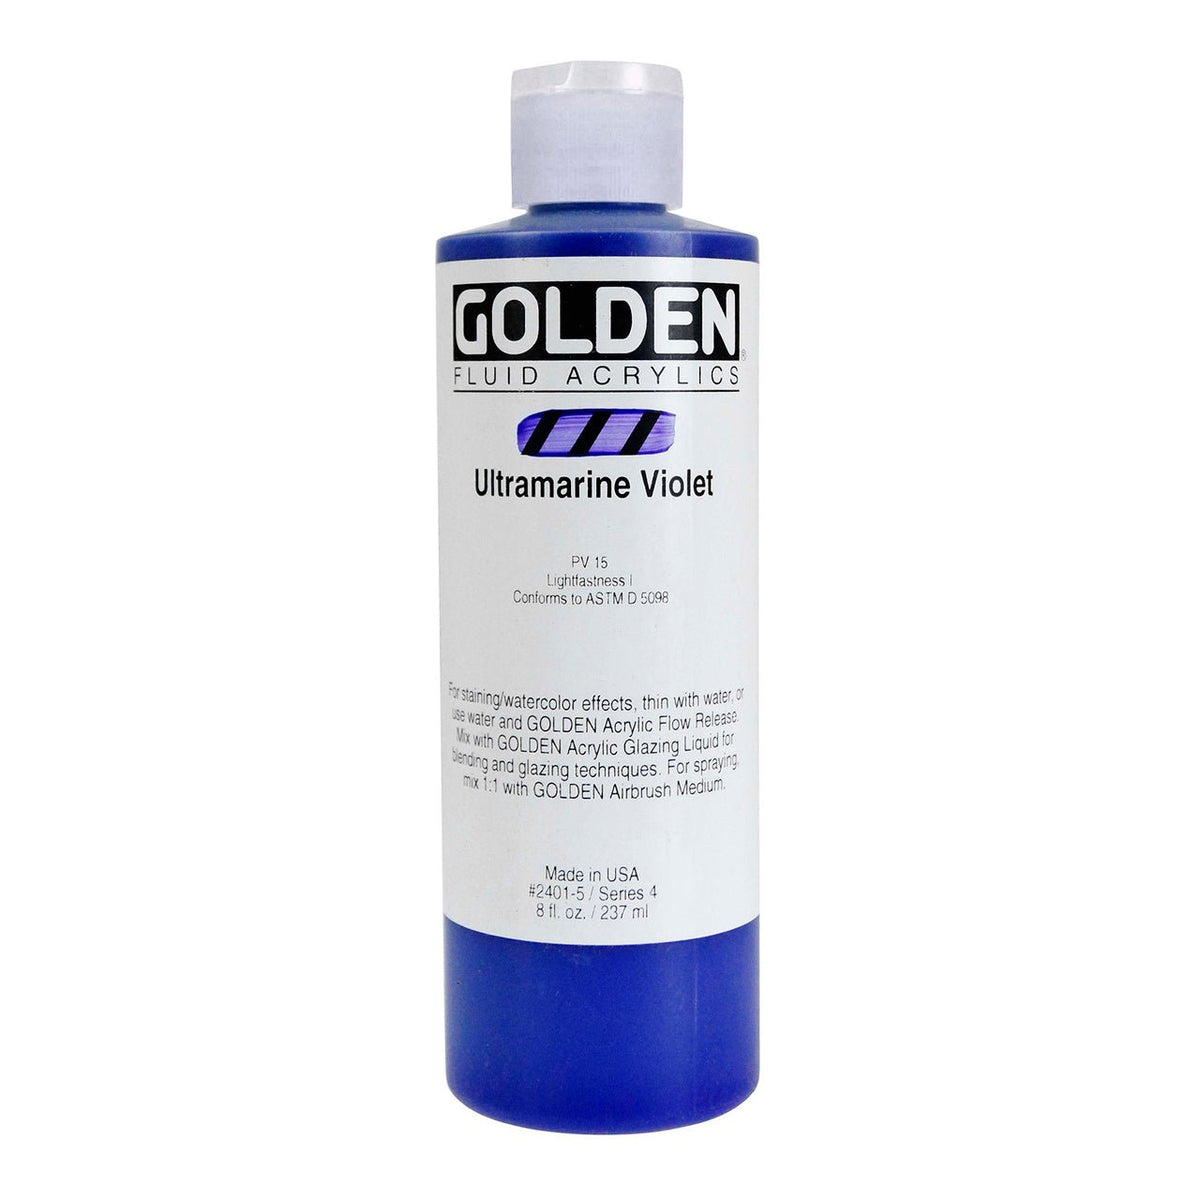 Golden Fluid Acrylic Ultramarine Violet 8 oz - merriartist.com